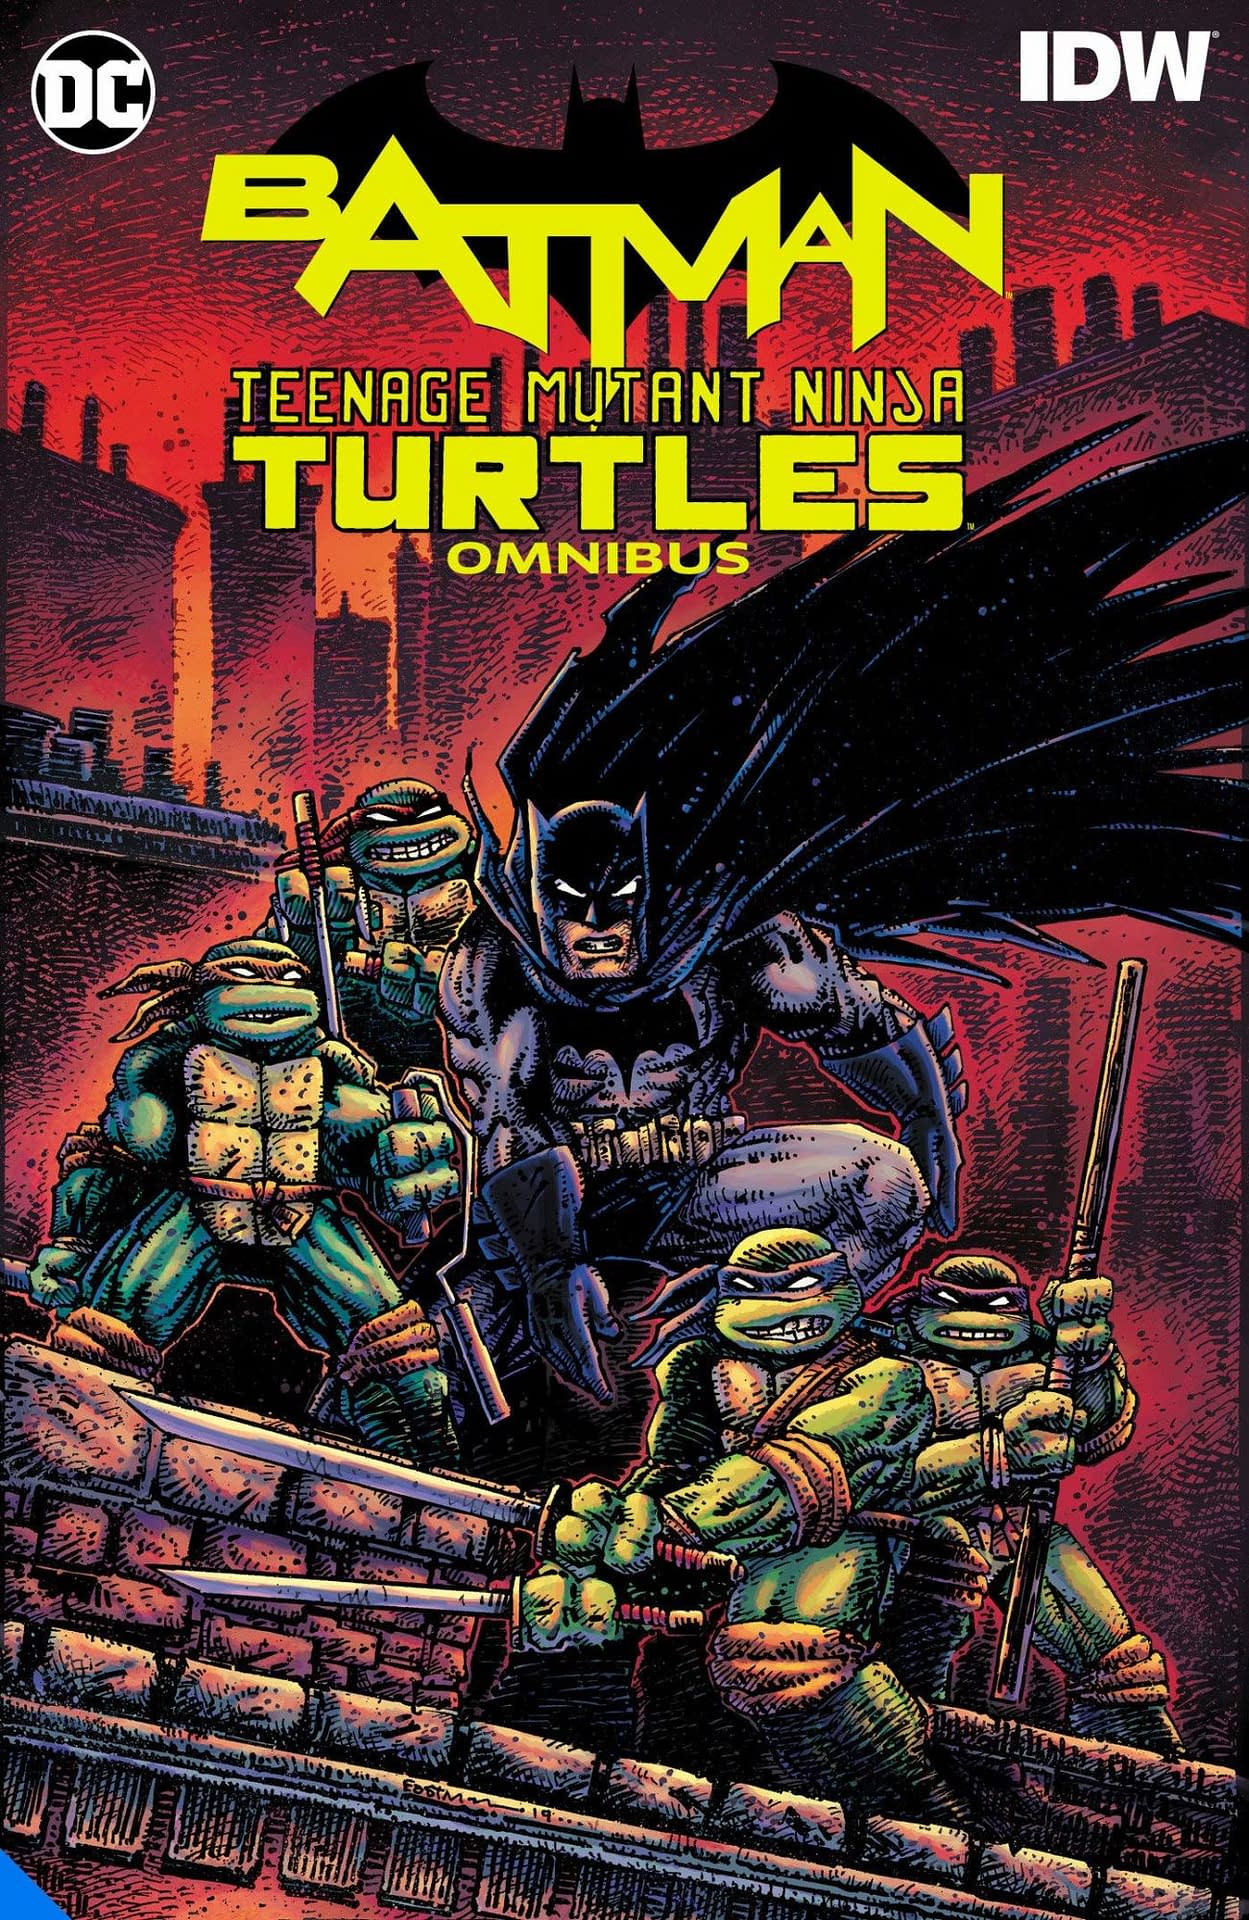 DC, IDW AND NICKELODEON REUNITE FOR BATMAN/TEENAGE MUTANT NINJA TURTLES III